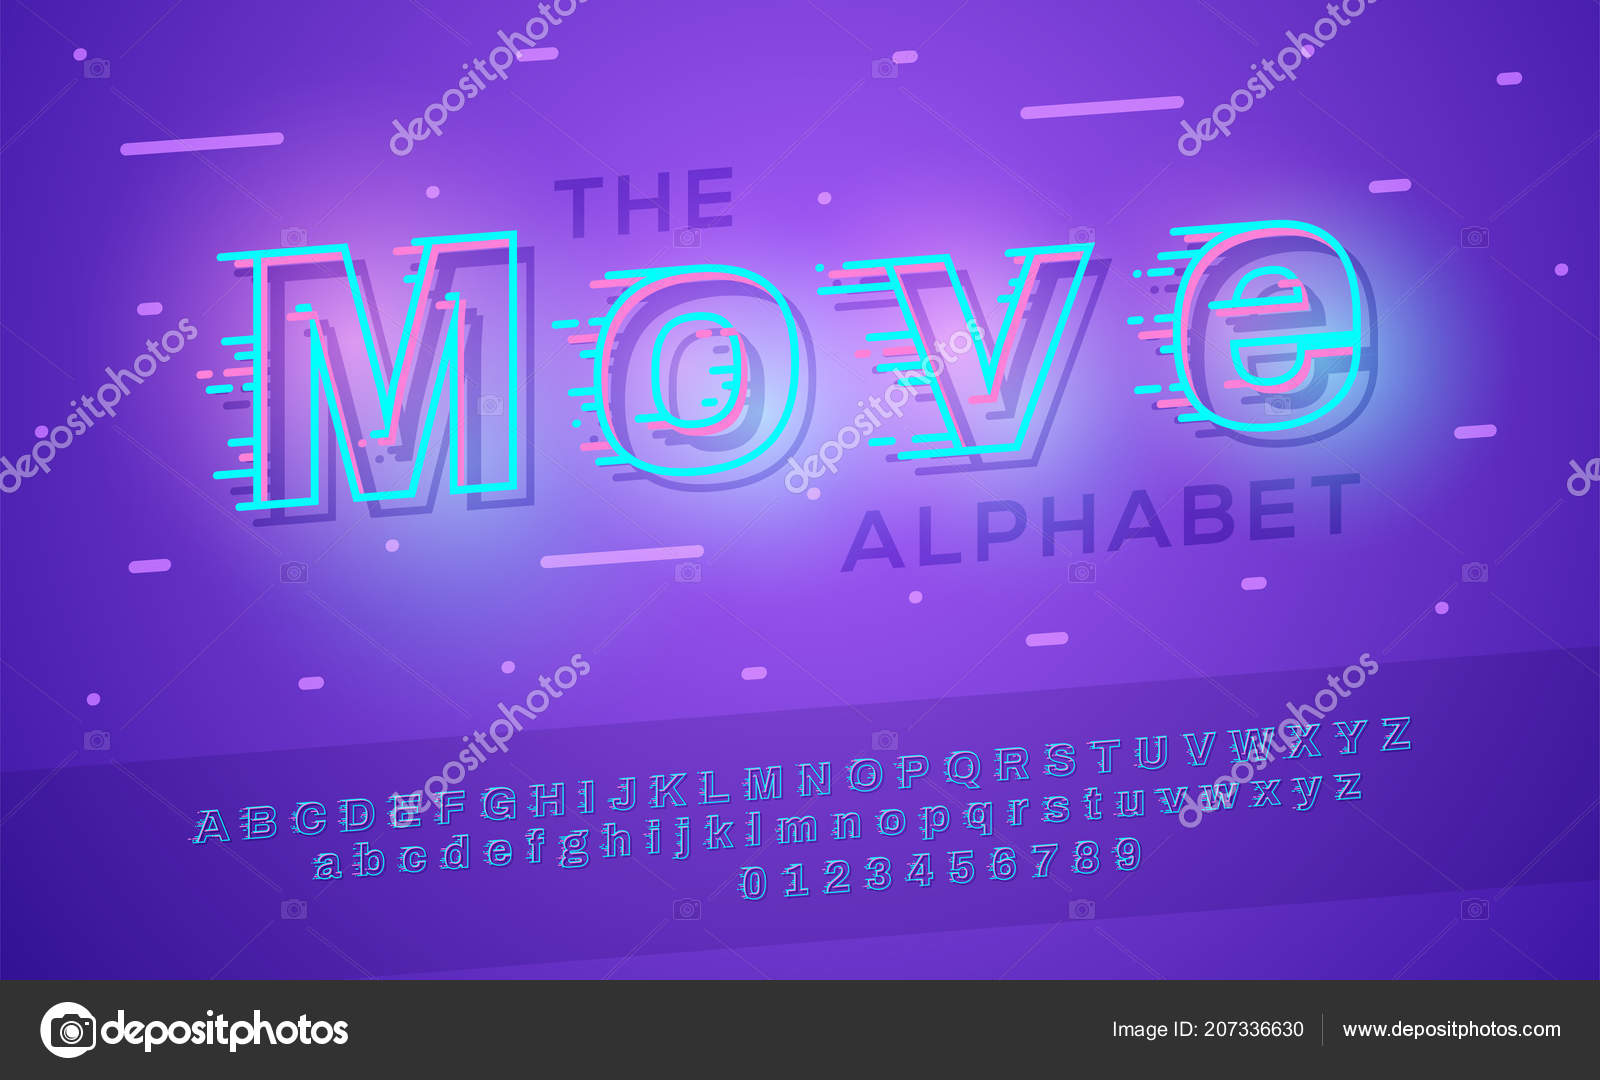 https://st4.depositphotos.com/6623886/20733/v/1600/depositphotos_207336630-stock-illustration-contour-font-motion-effect-typography.jpg